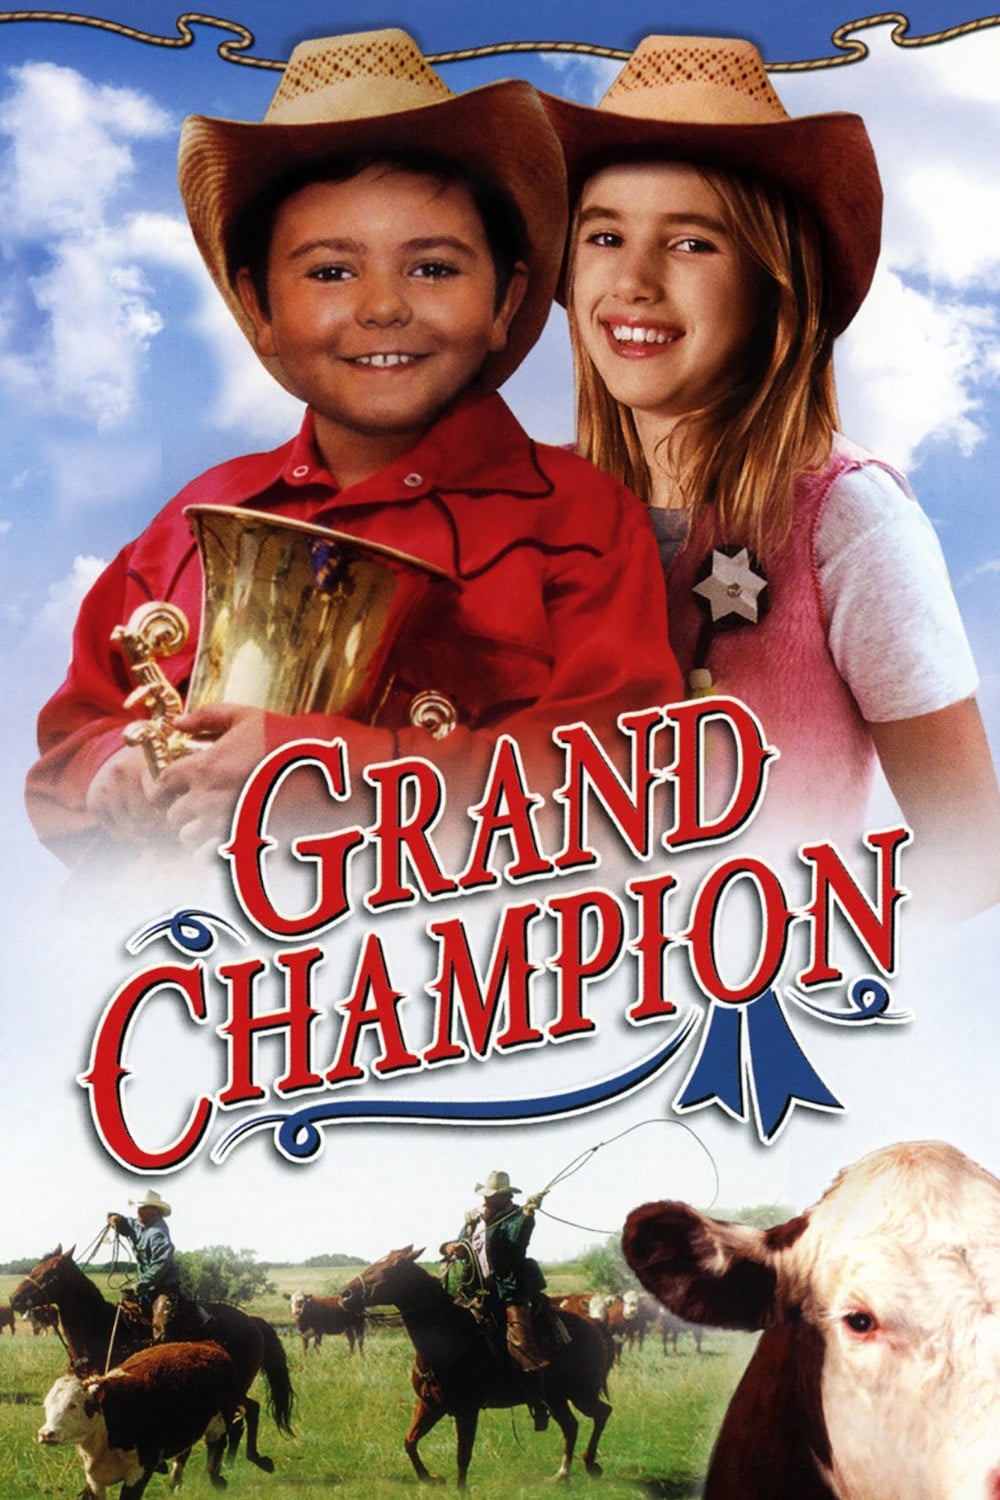 Grand Champion (2004)